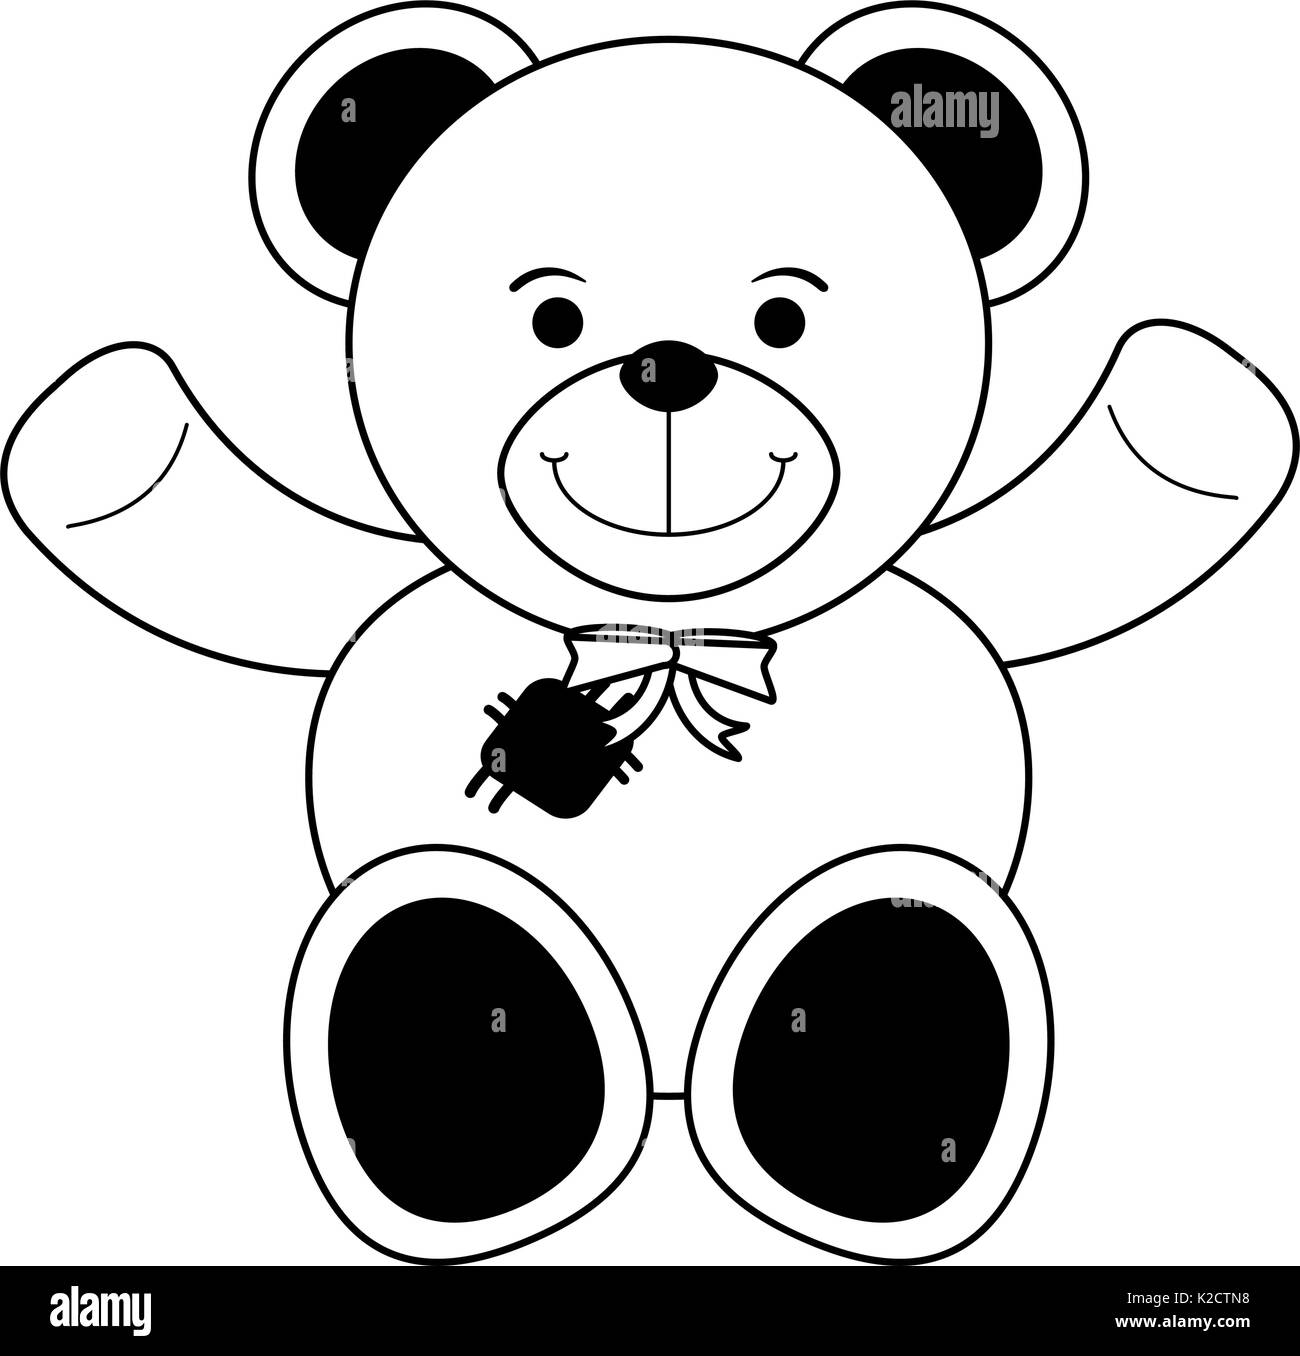 teddy bear toy icon image  Stock Vector